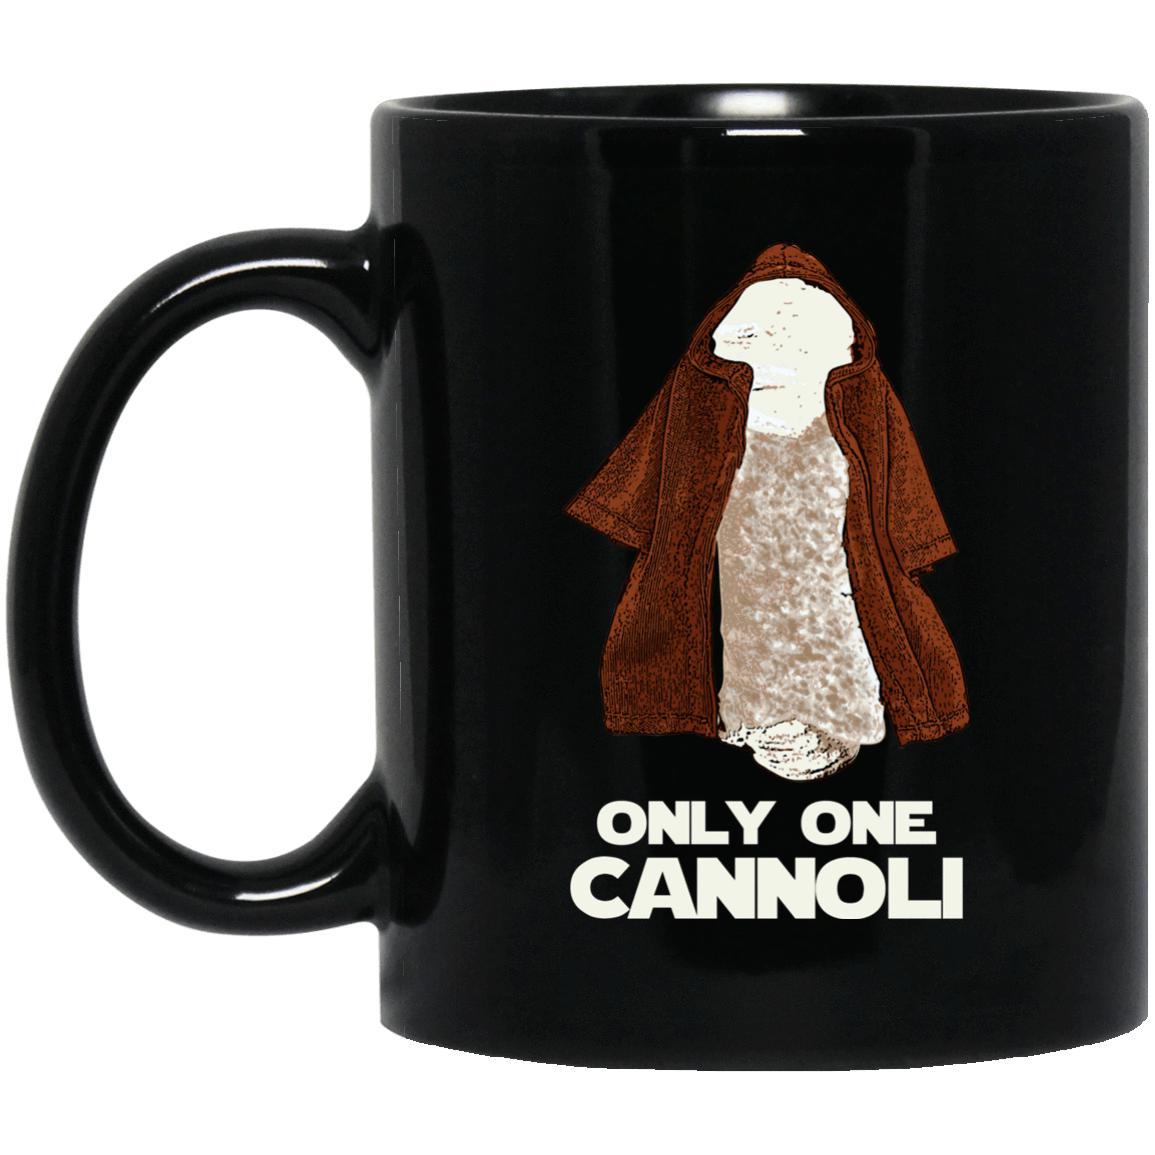 Only One Cannoli Mugs